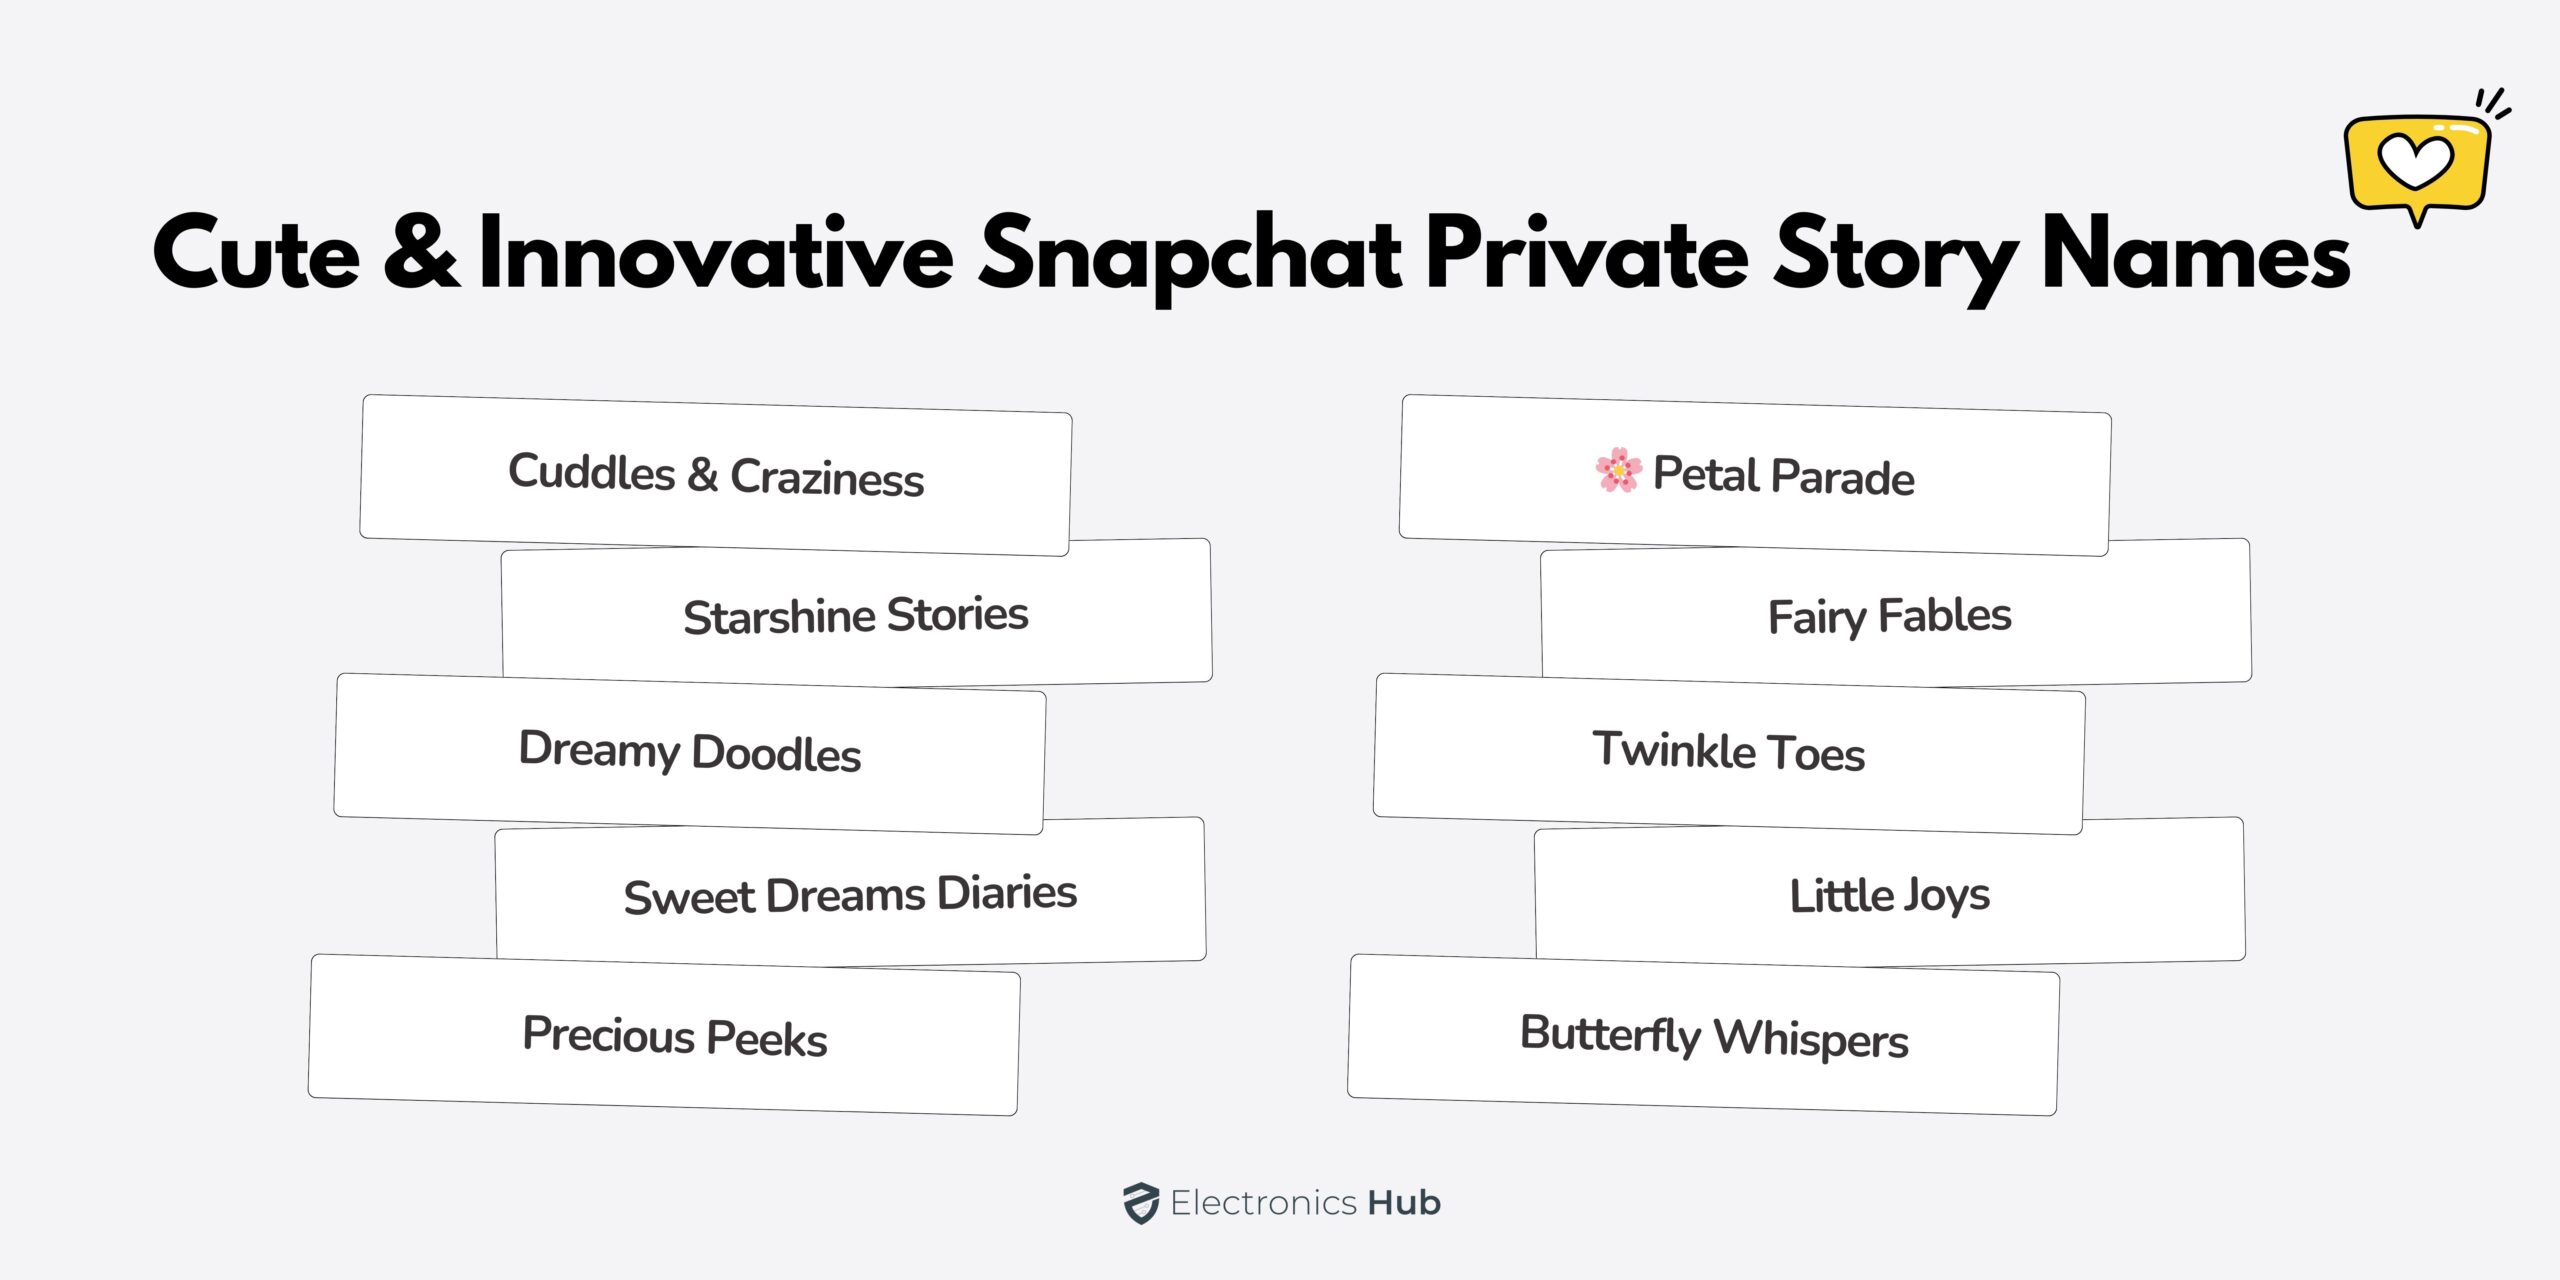 Cute & Innovative Snapchat Private Story Names